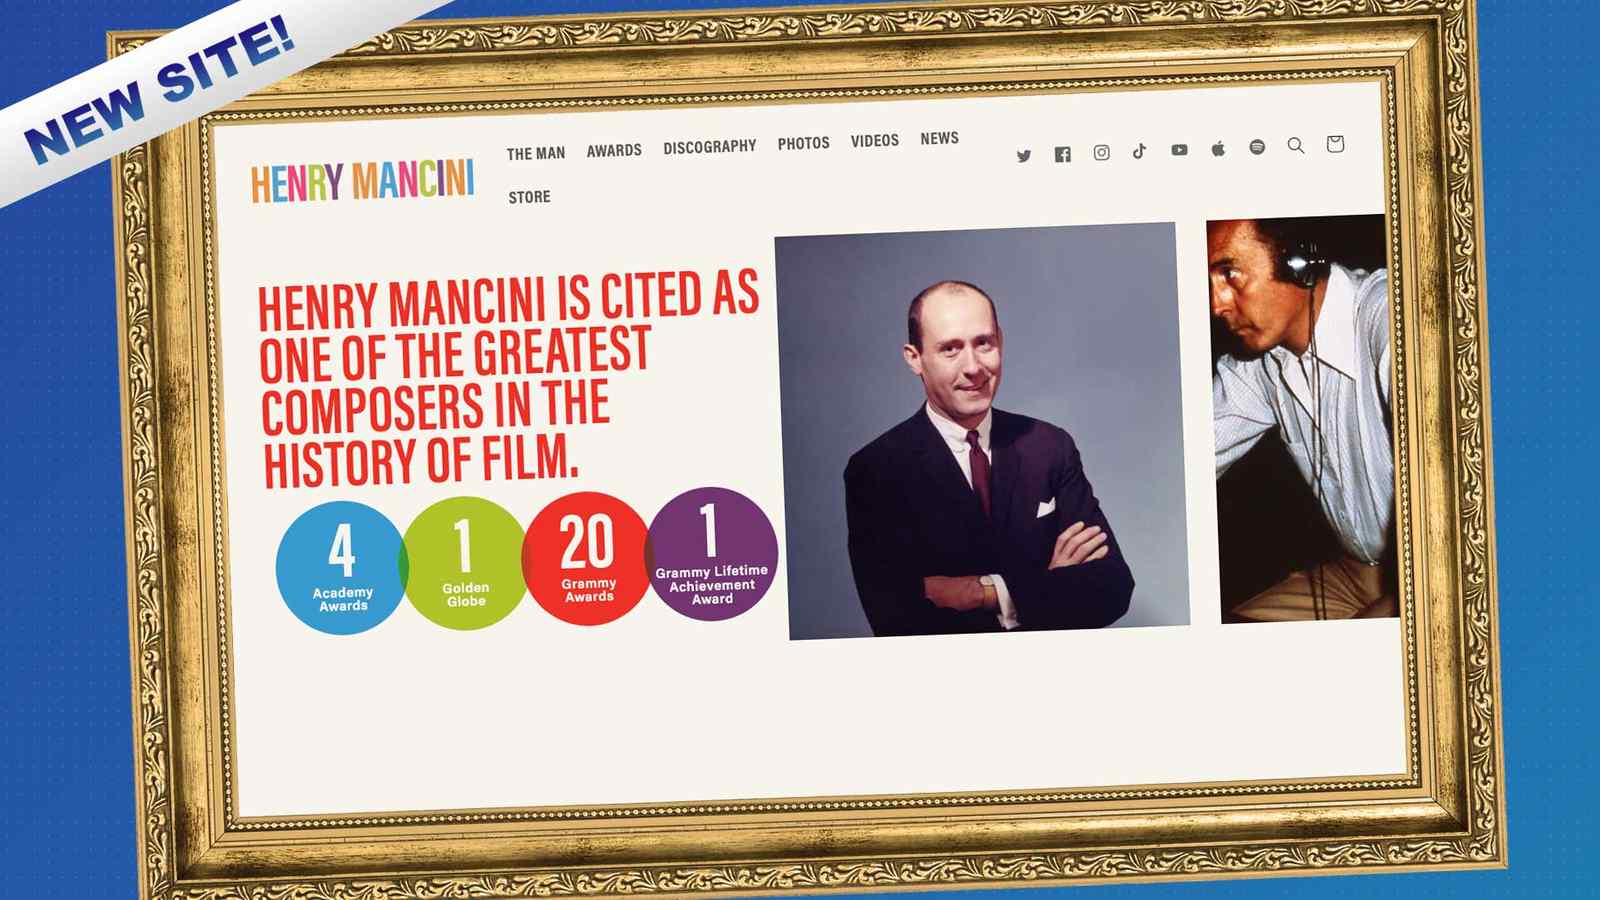 New Site Alert! Henry Mancini